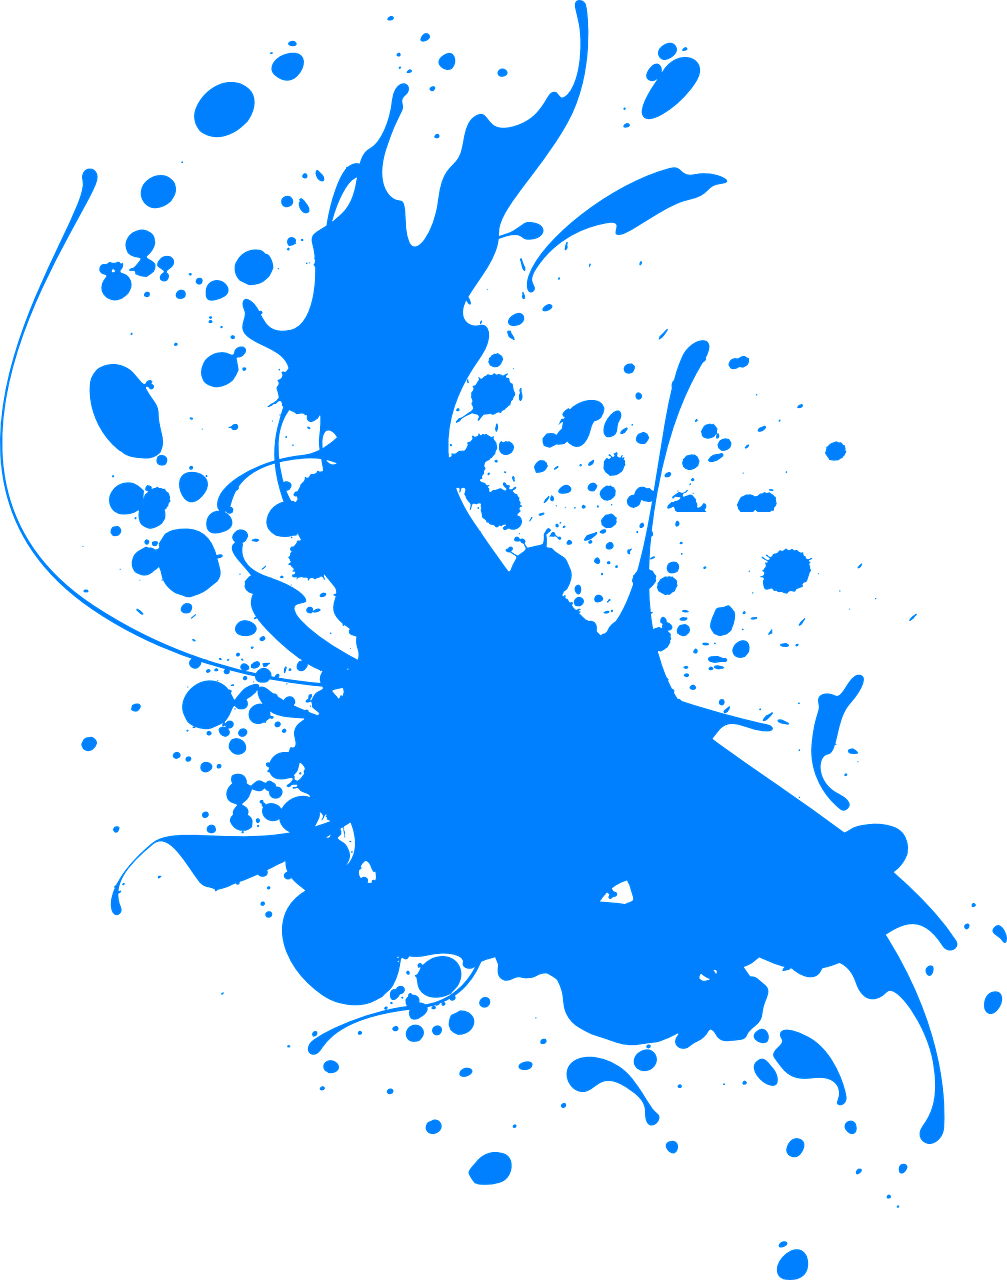 A Blue Paint Splatter On A Black Background